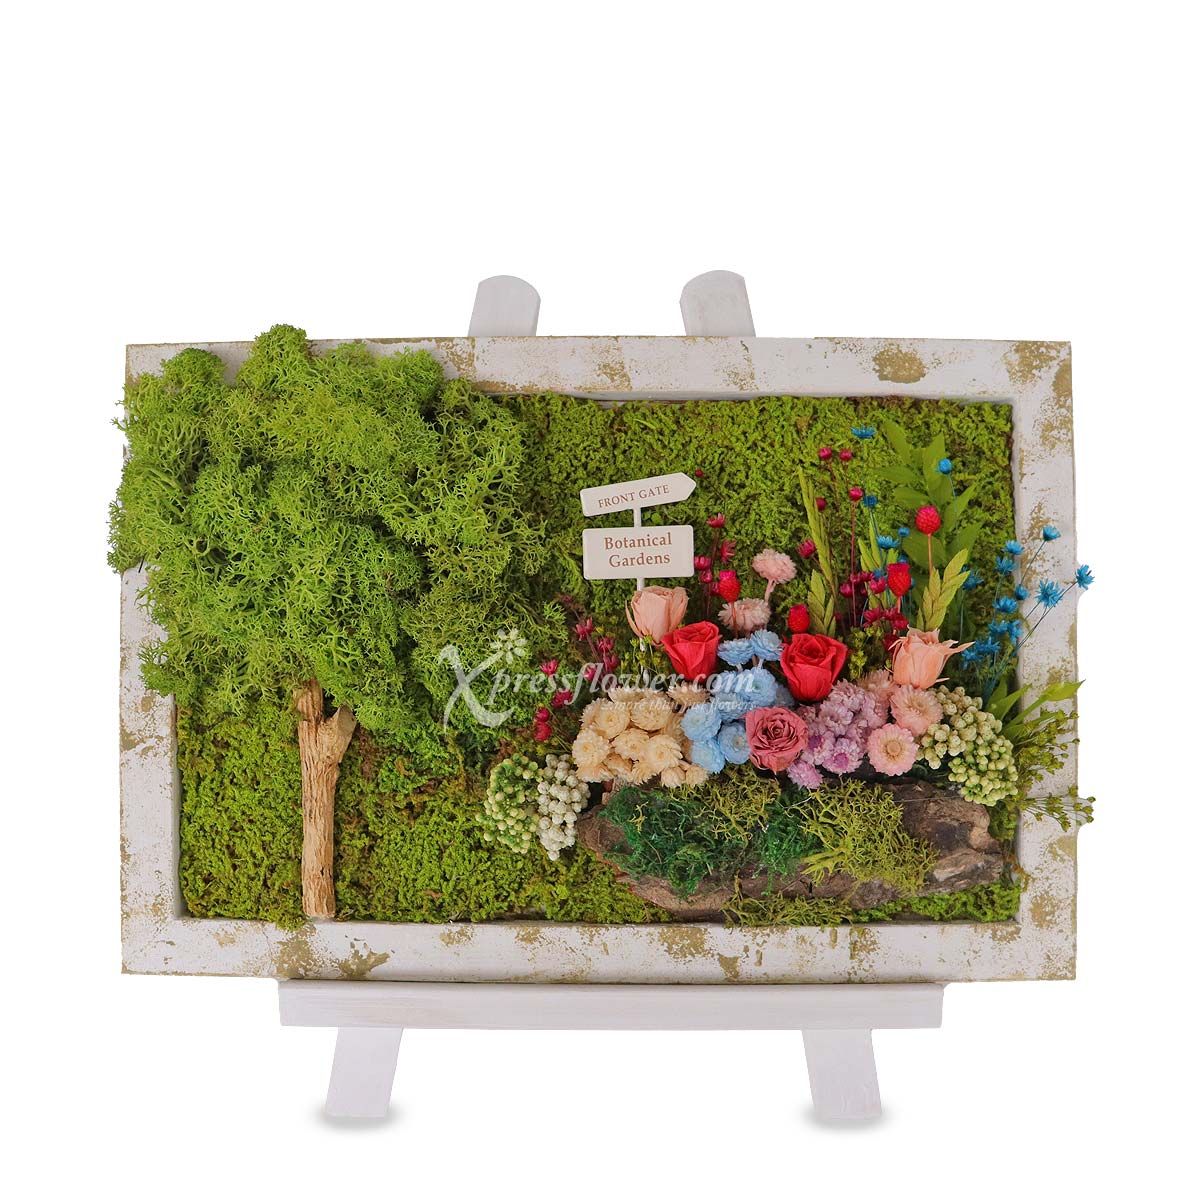 Petit Jardin (Moss art with preserved flowers)